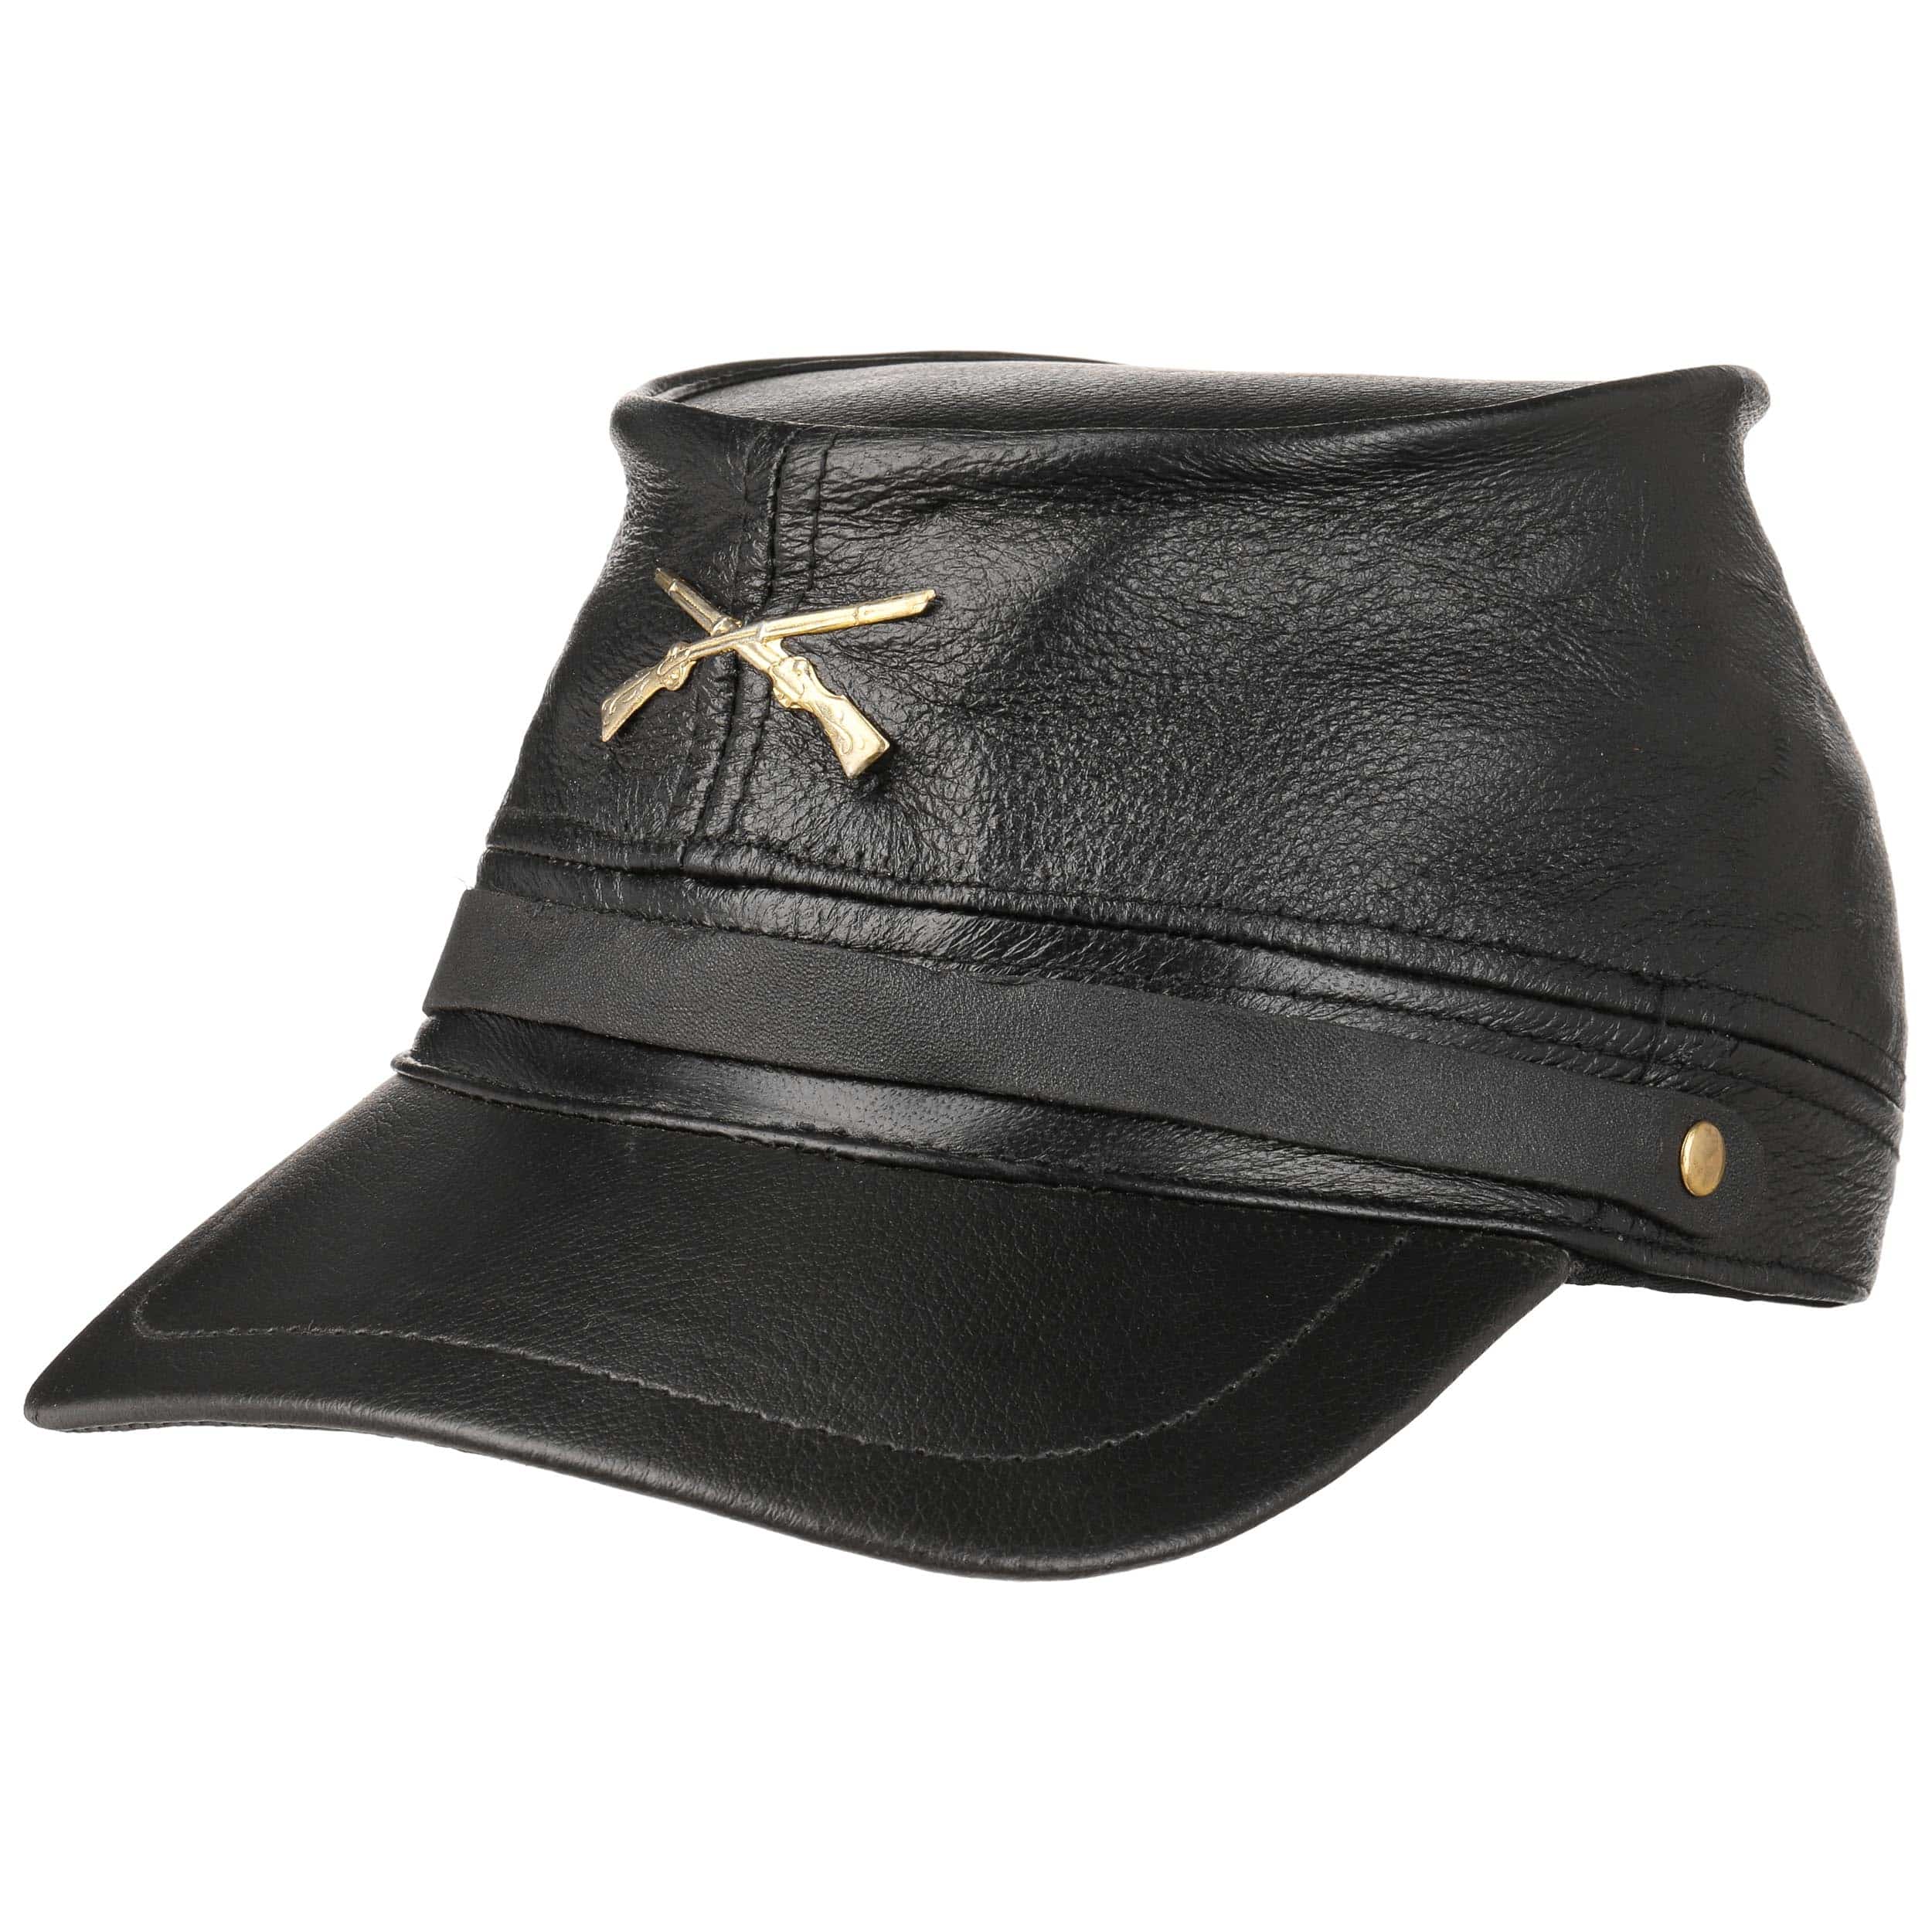 peaked leather cap